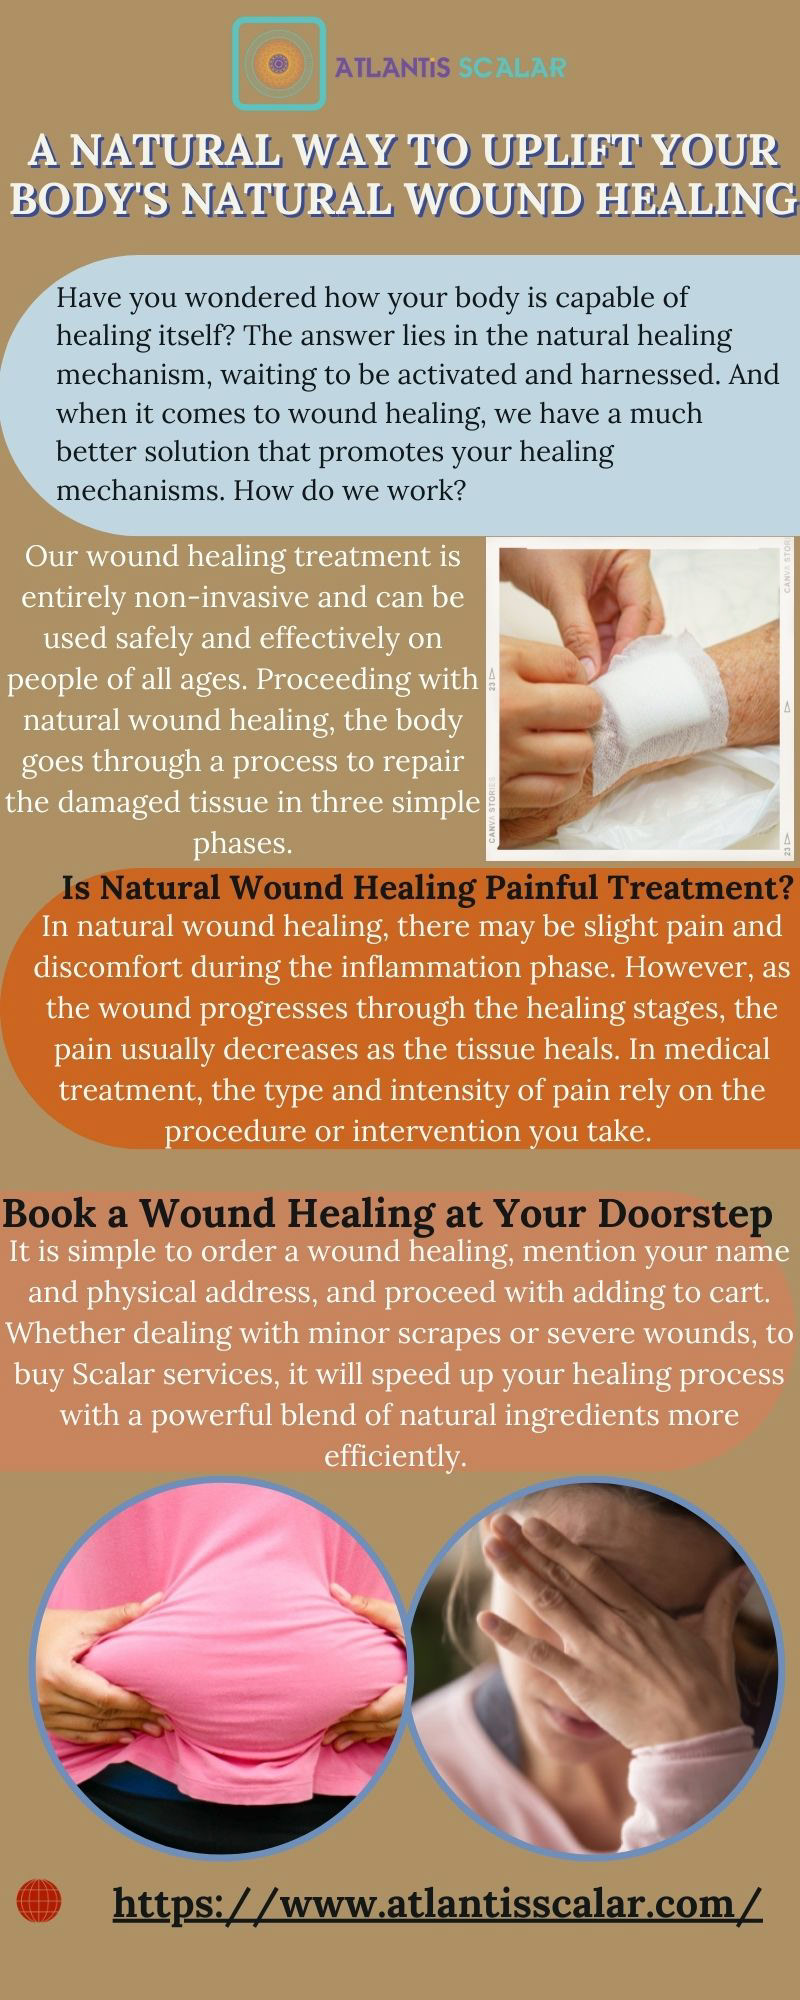 Wound Healing Services